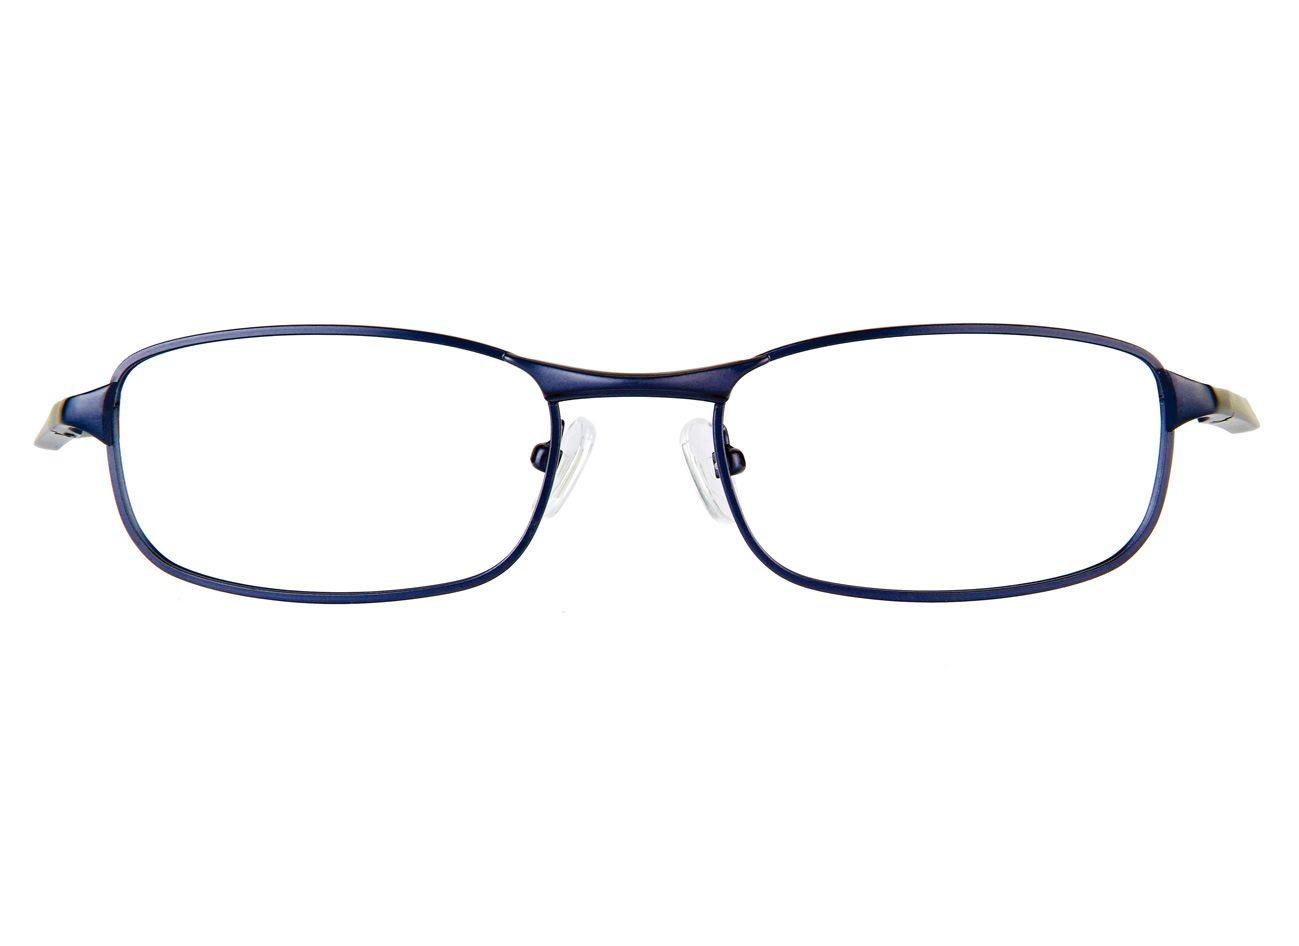 Hudson HD-62 ANSI Rated Prescription Safety Glasses